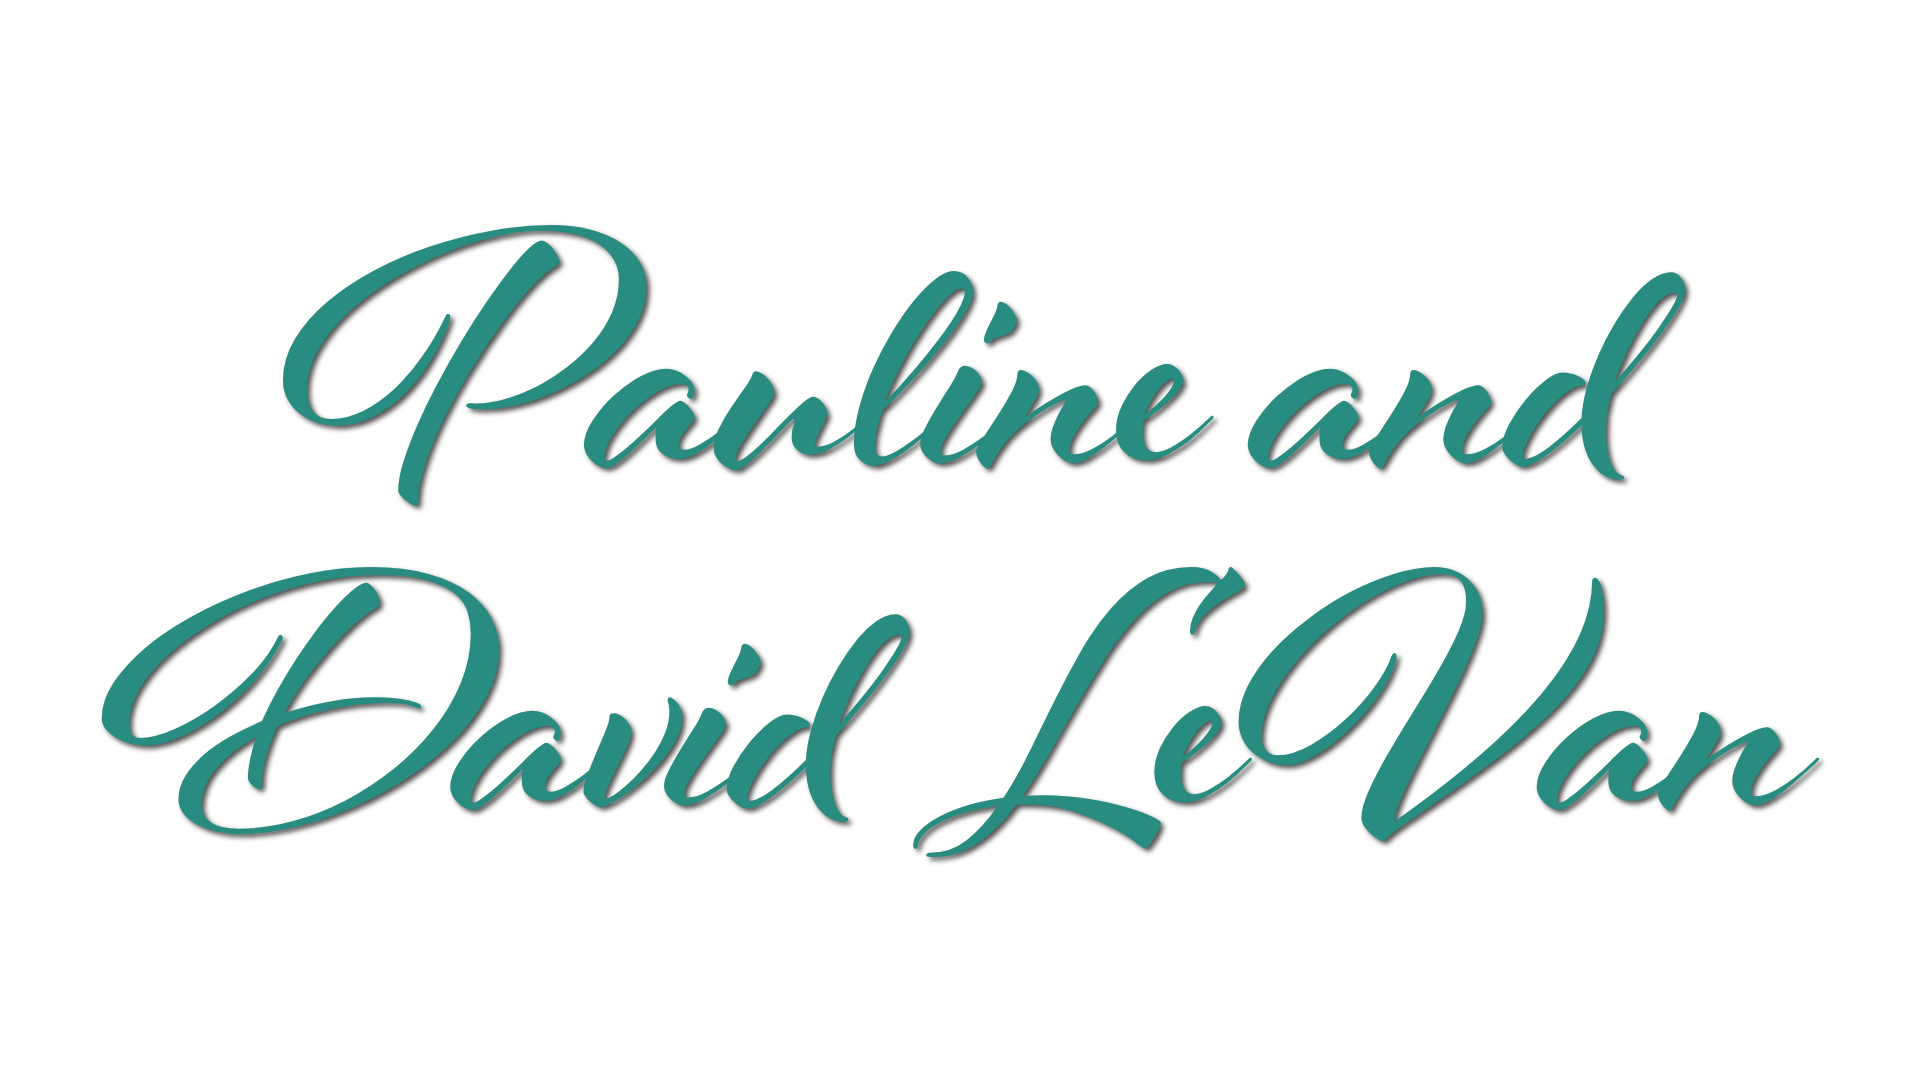 Childhood Guardian - David and Pauline LeVan